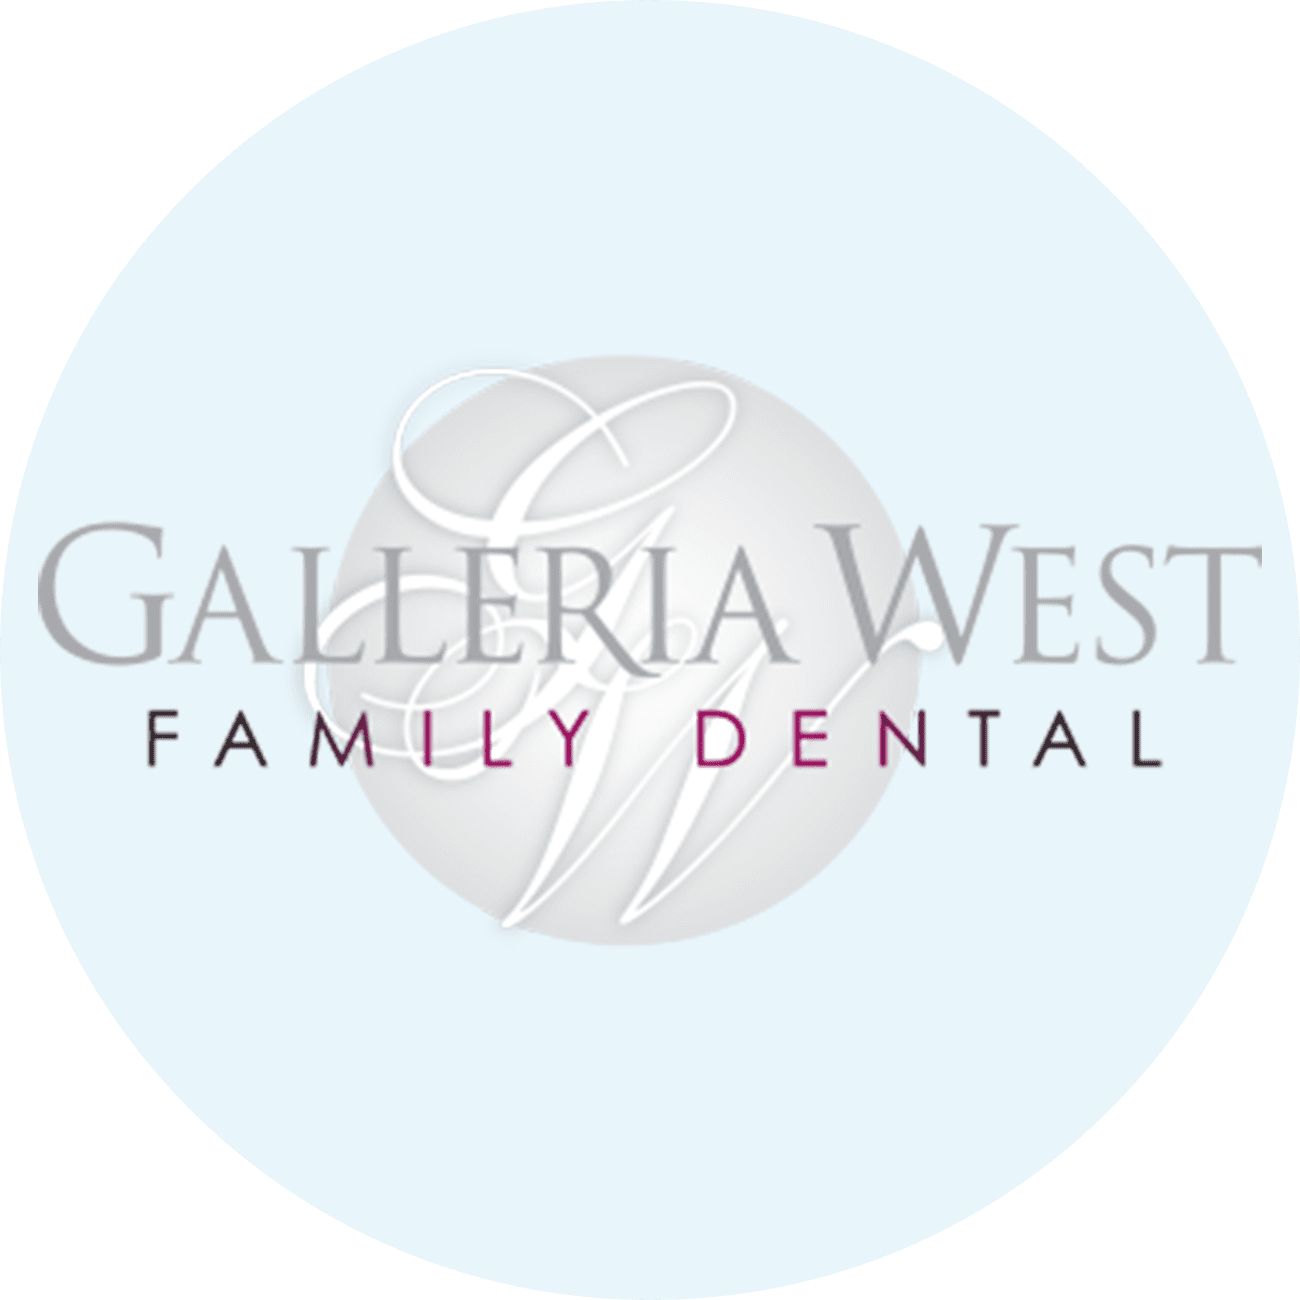 Galleria West Family Dental